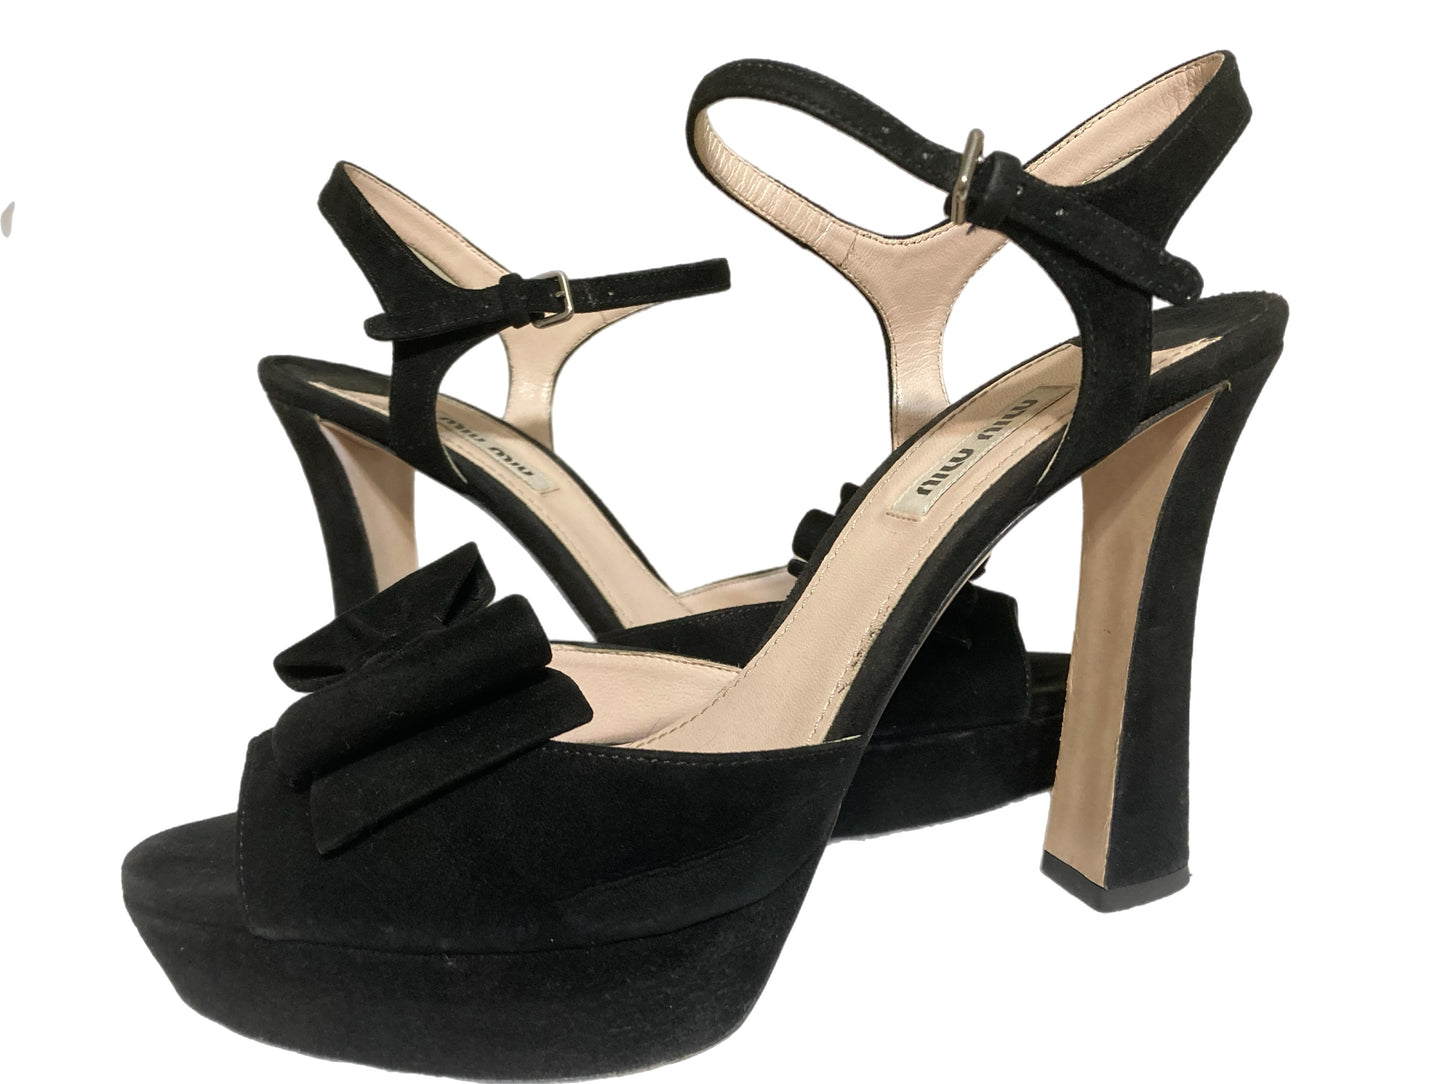 MIU MIU Suede Bow Platform Sandals Black Size 39